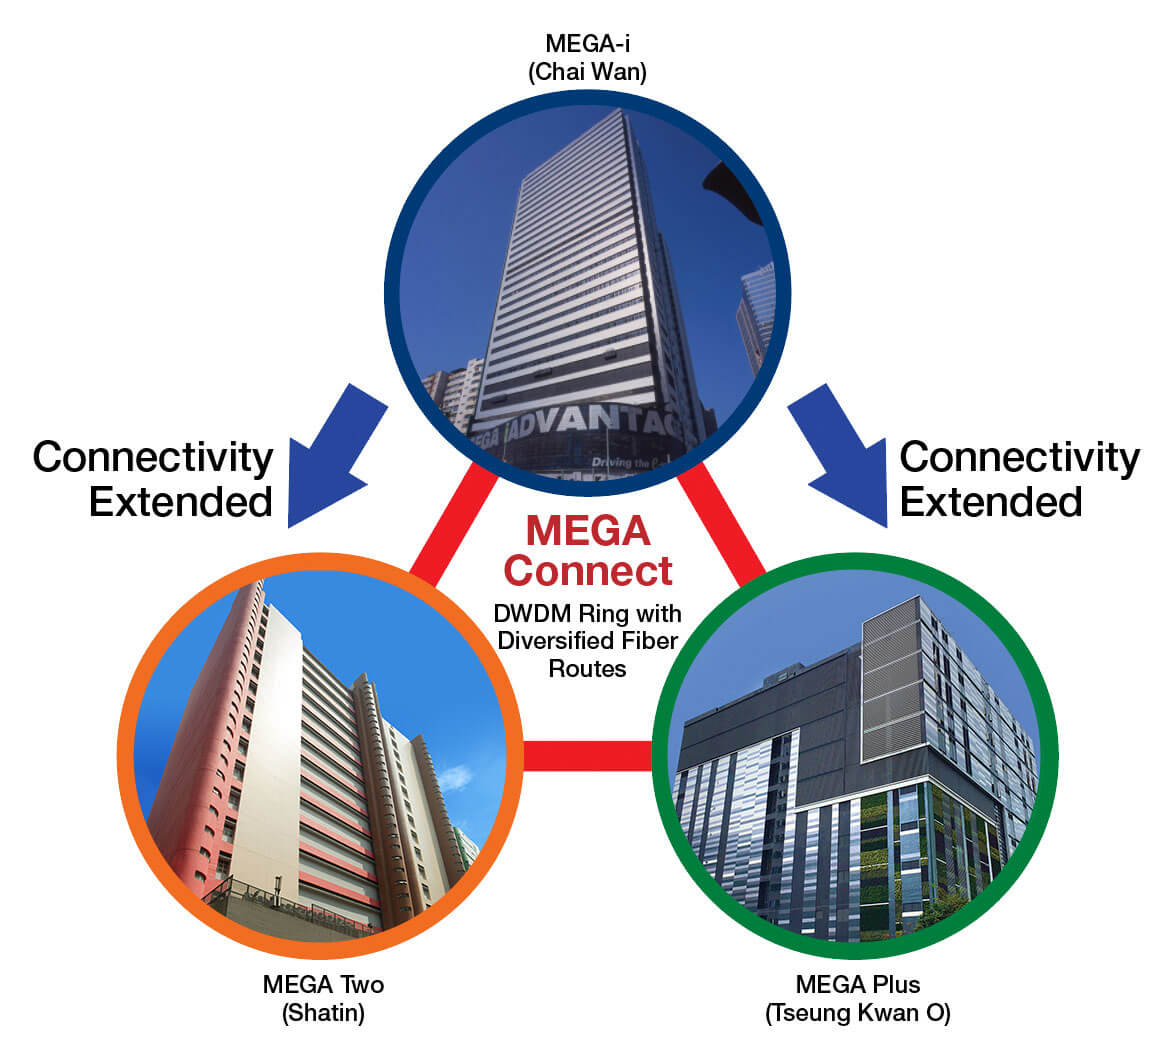 MEGA-i MEGA Plus and MEGA TWO Data Centres to form SUNeVision MEGA Campus Data Centre in Hong Kong